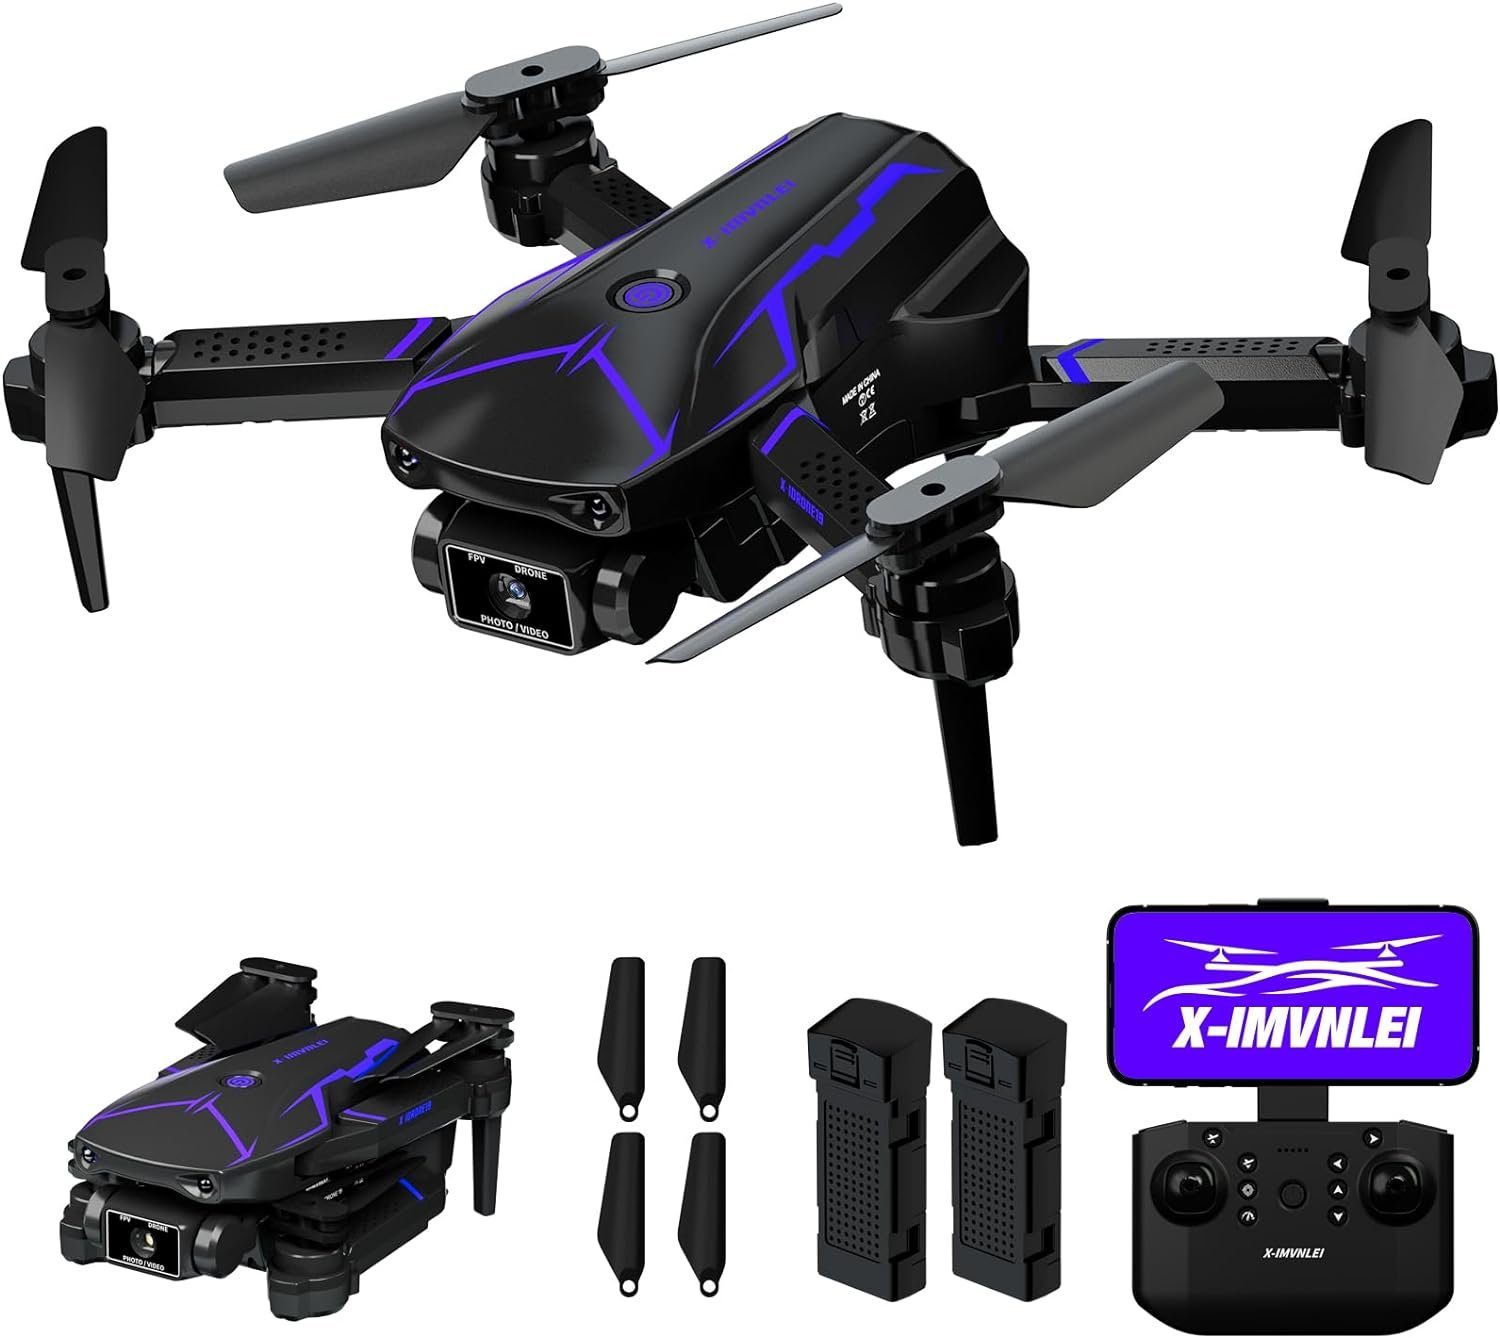 X-IMVNLEI Drohne (720P, Mini faltbare RC Quadricopter Drohne, RC FPV Drohnen mit WiFi Kamera)